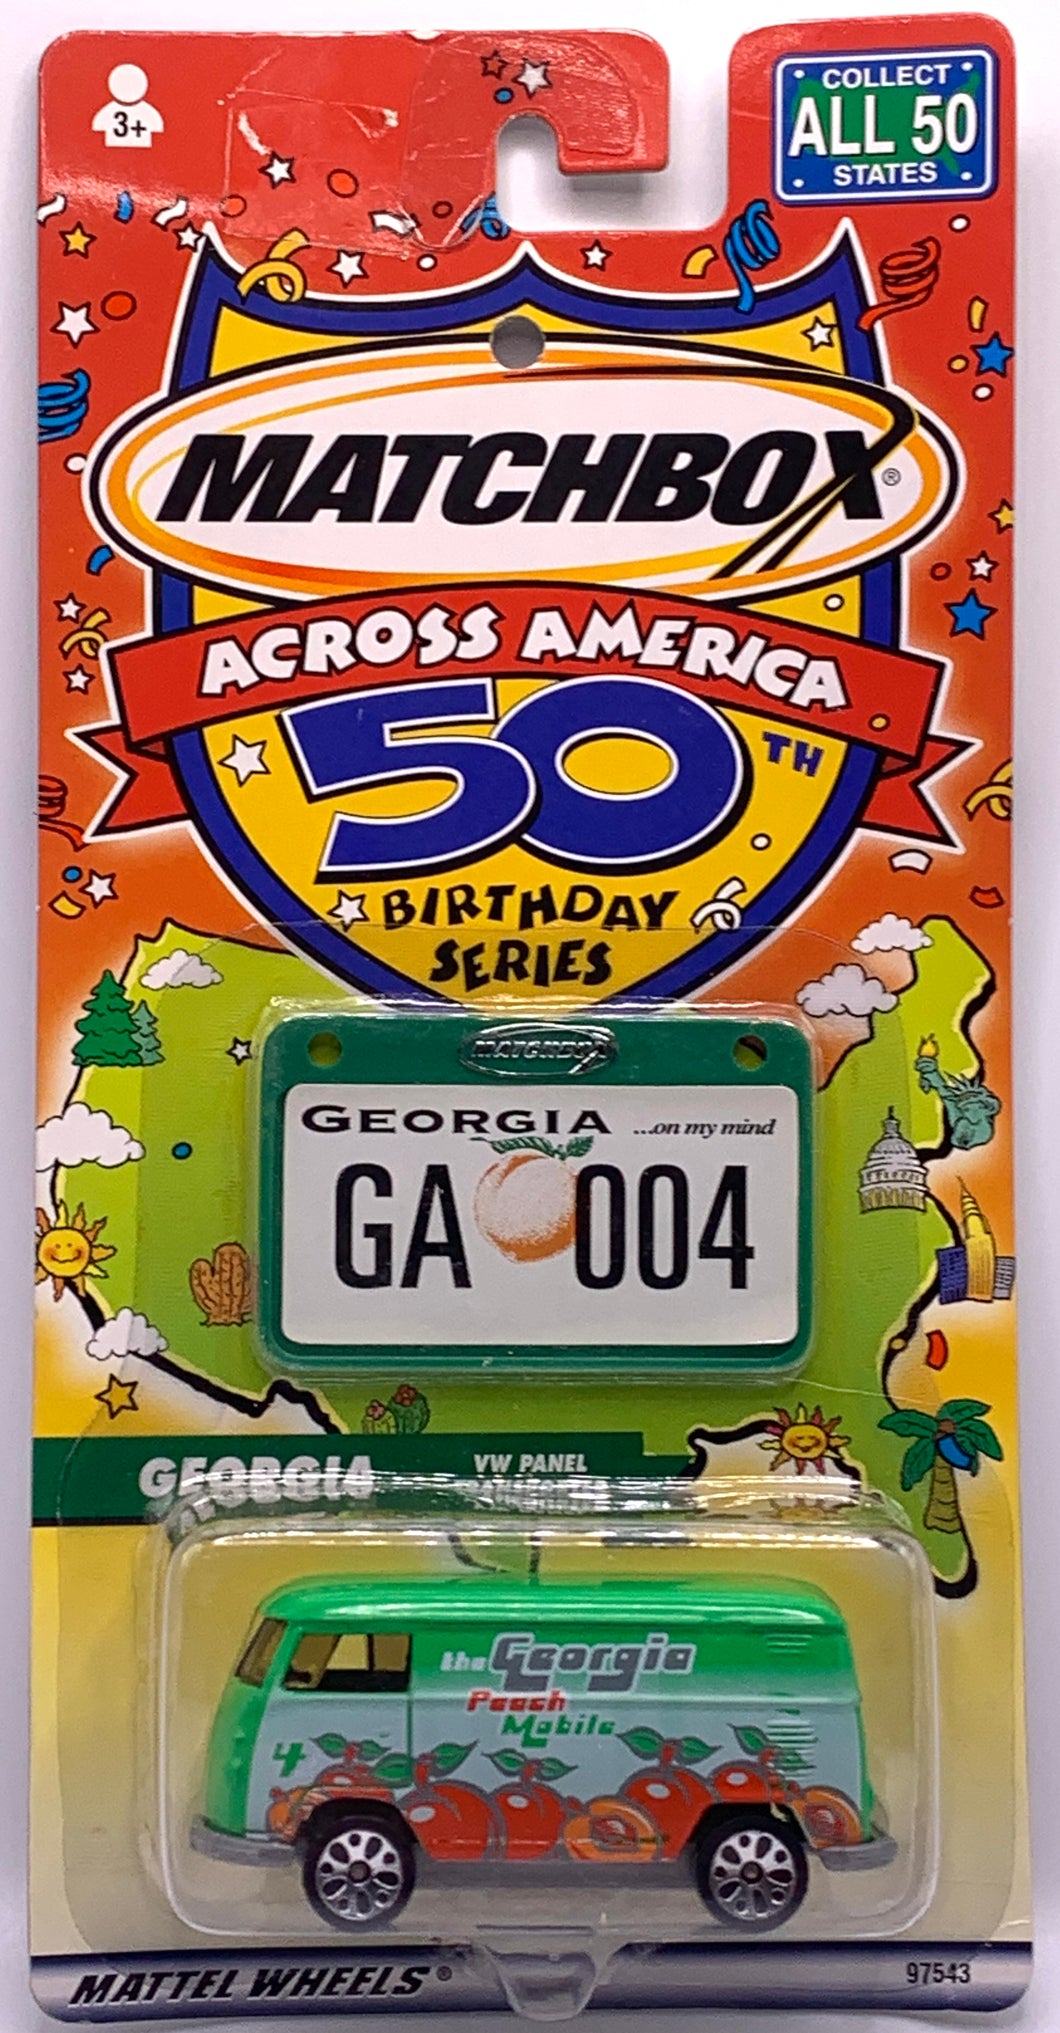 GEORGIA The Georgia Peach Mobile 1/58 Matchbox Across America 50th Birthday Series